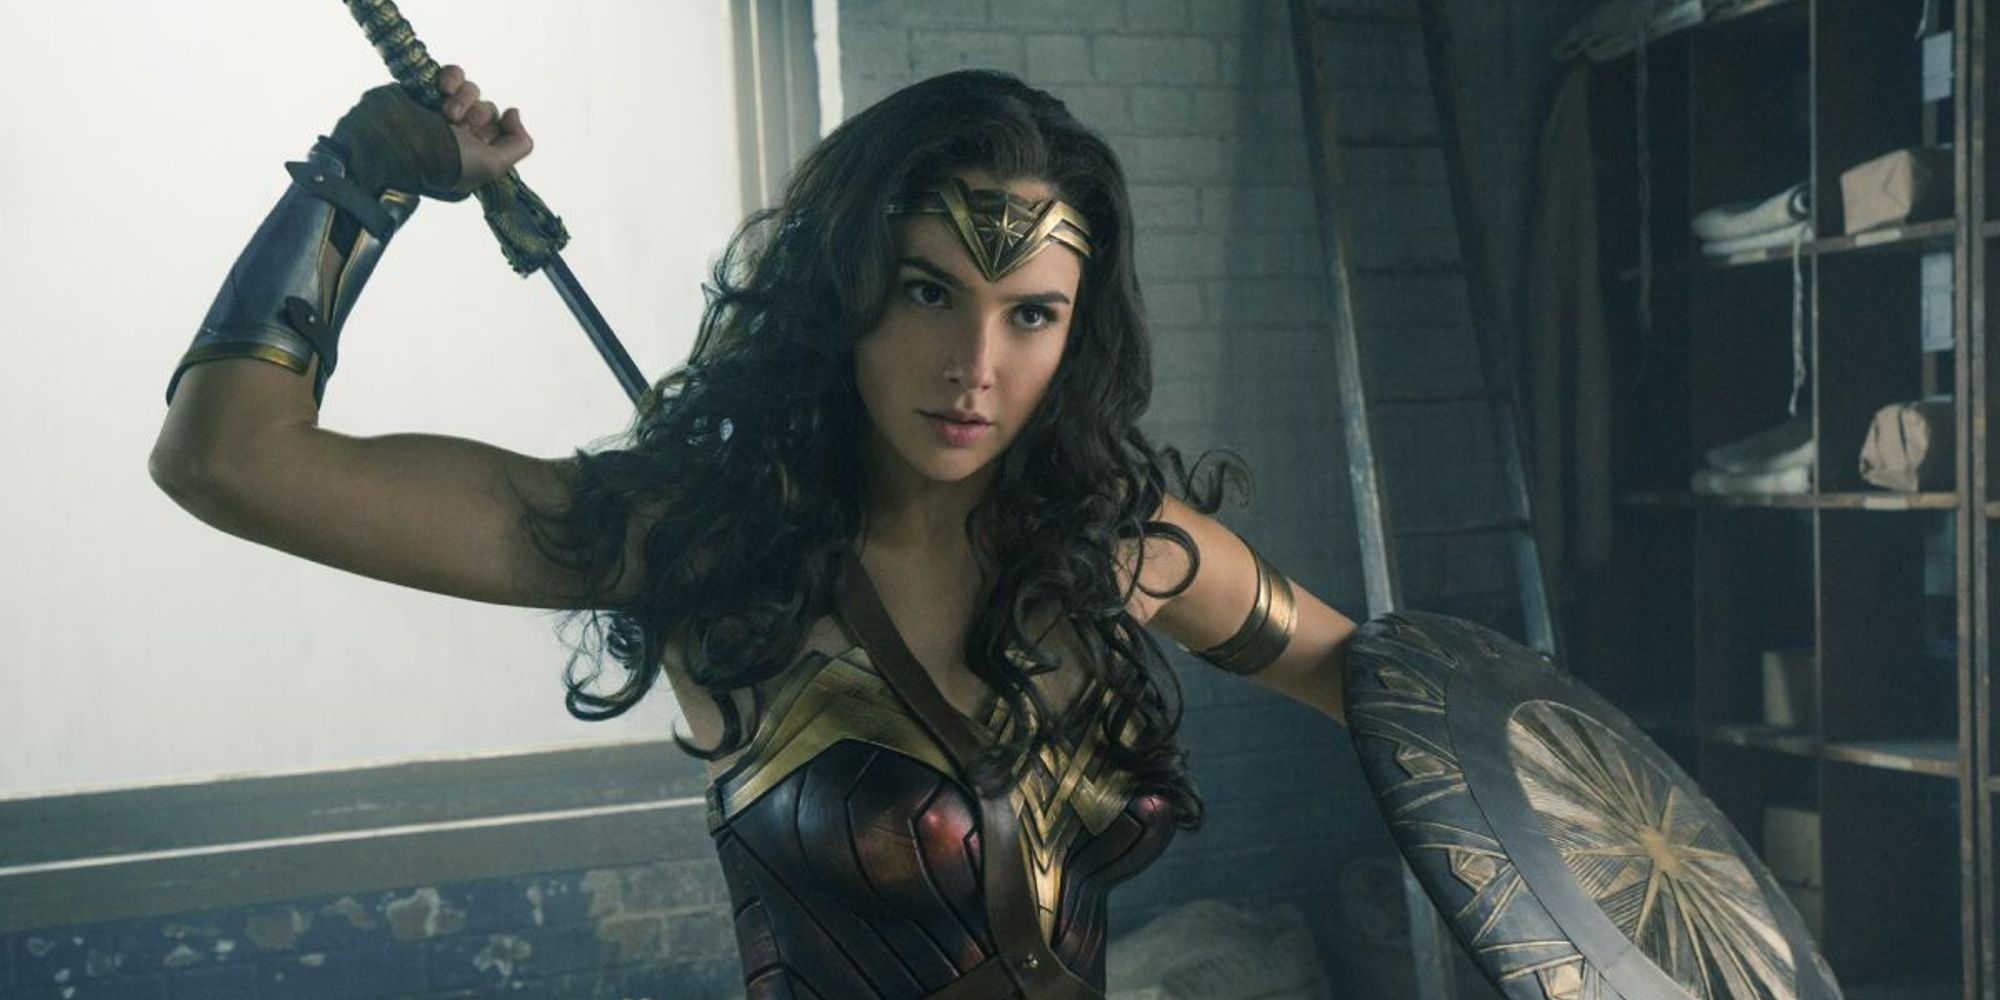 Gal Gadot as Diana Prince drawing her sword in Wonder Woman (2017).